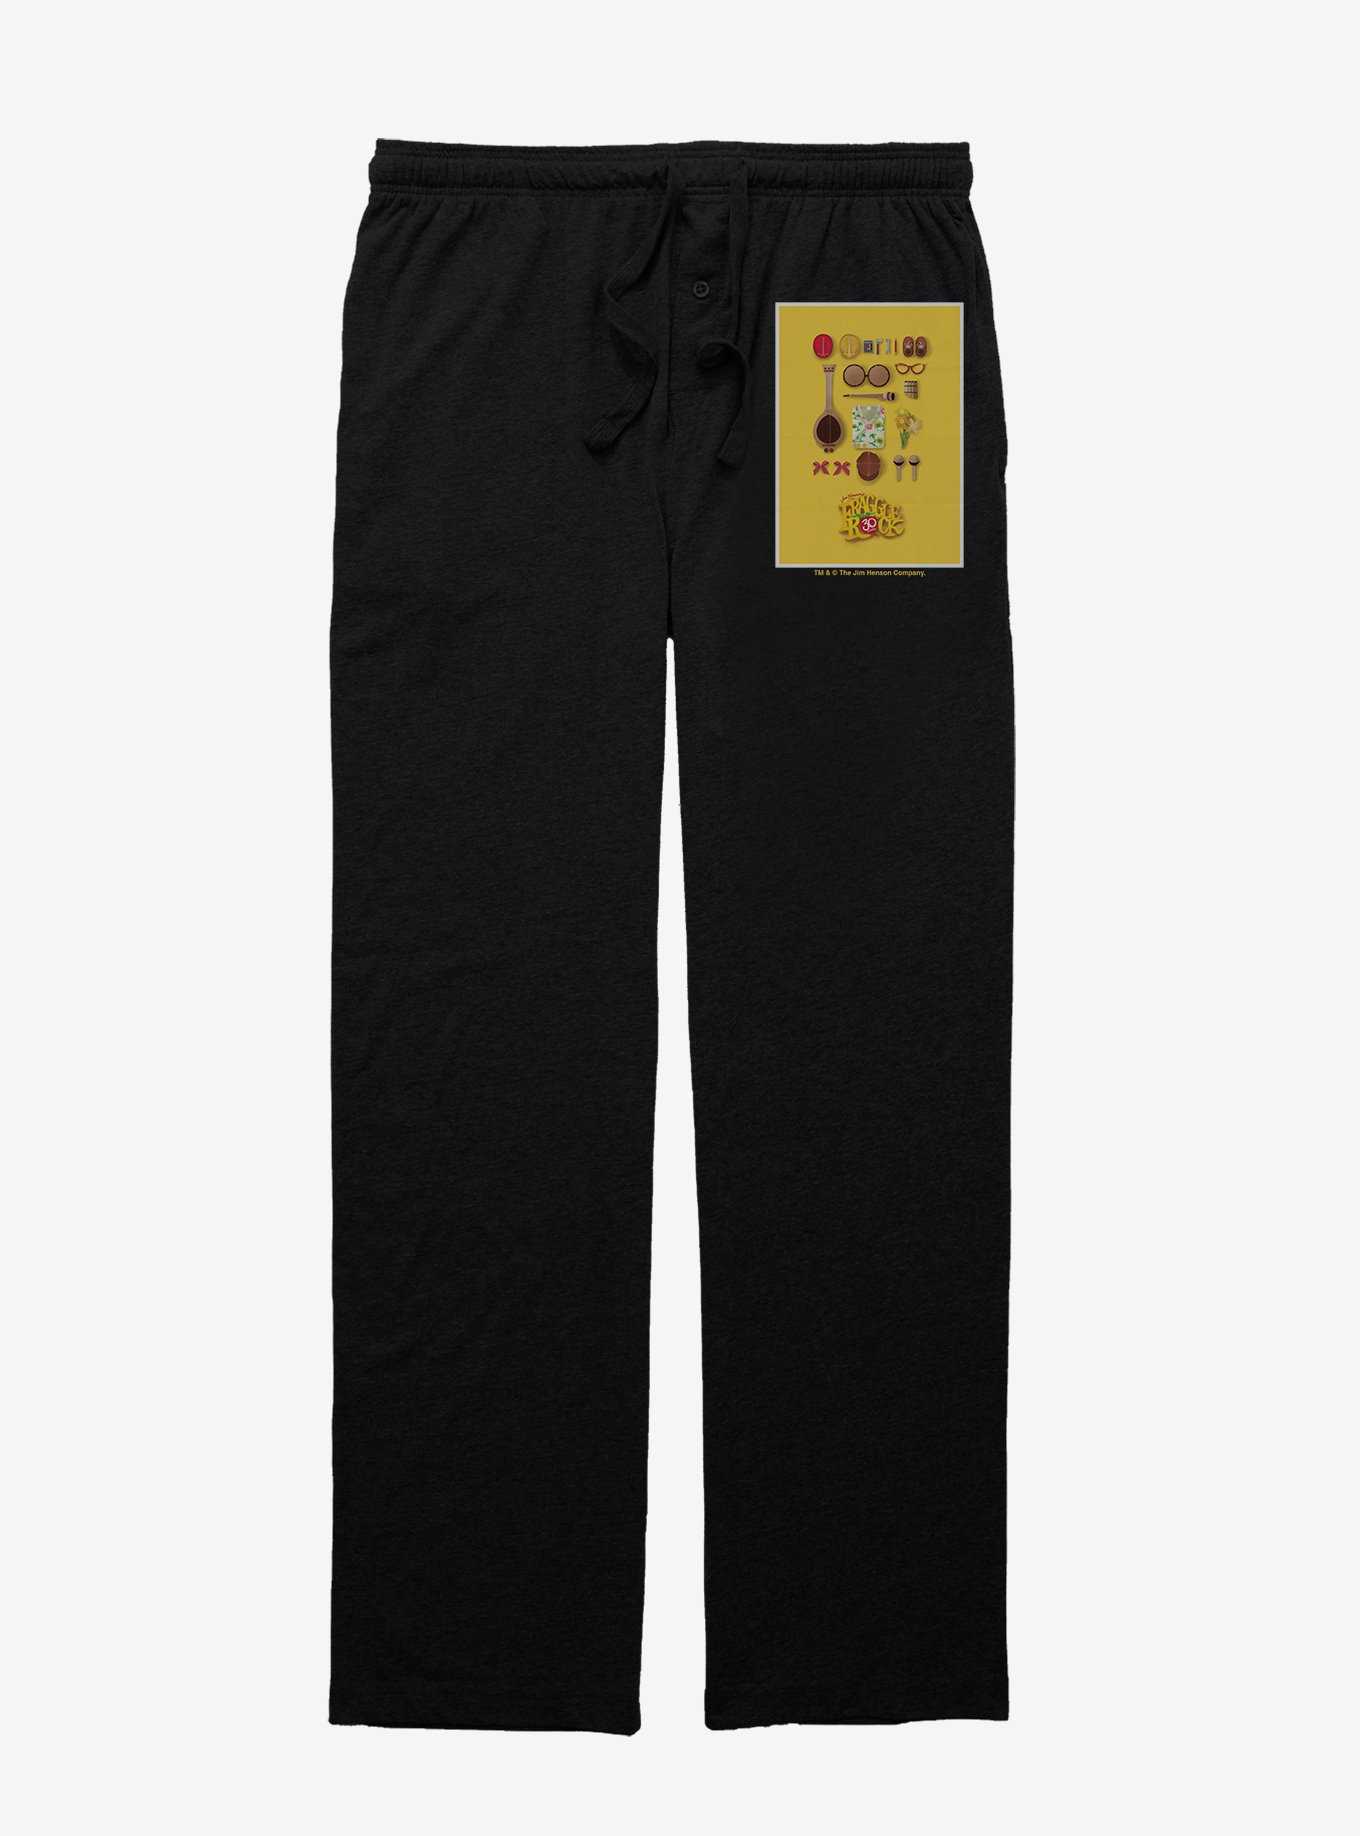 Jim Henson's Fraggle Rock 30 Years Pajama Pants, , hi-res